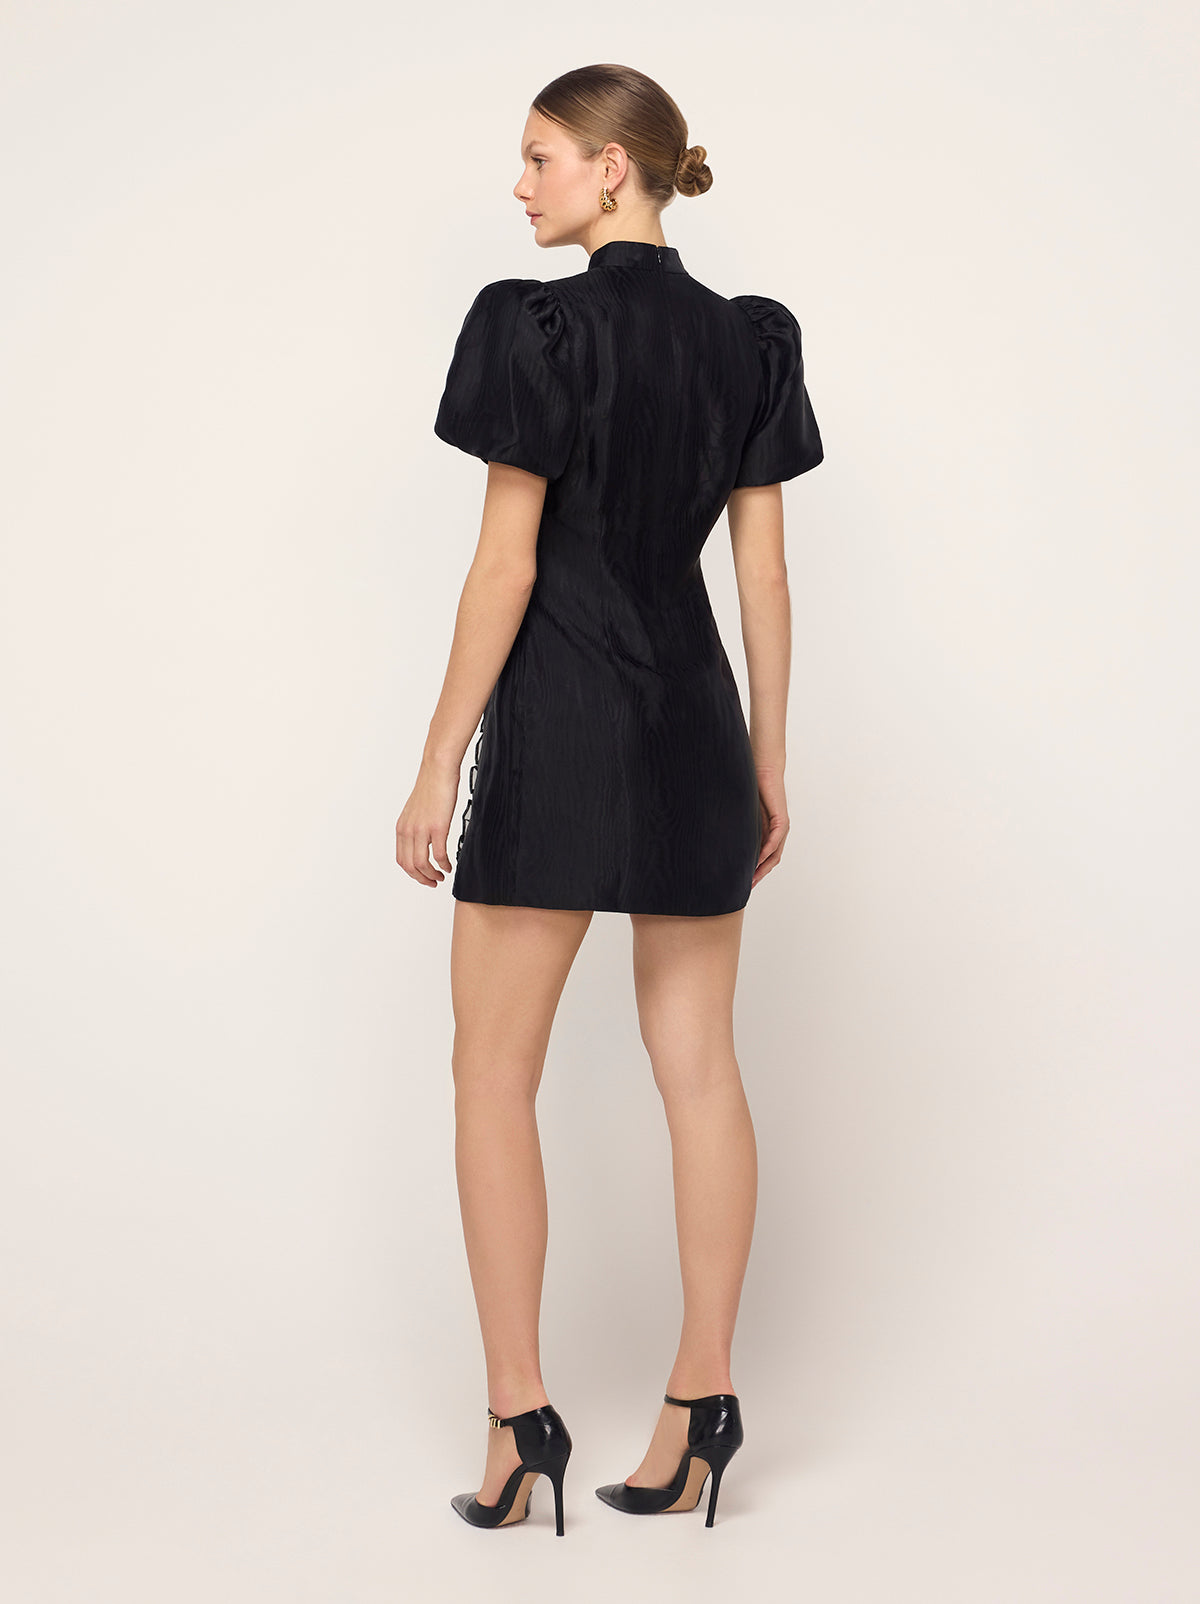 Philippa Black Moire Mini Dress By KITRI Studio